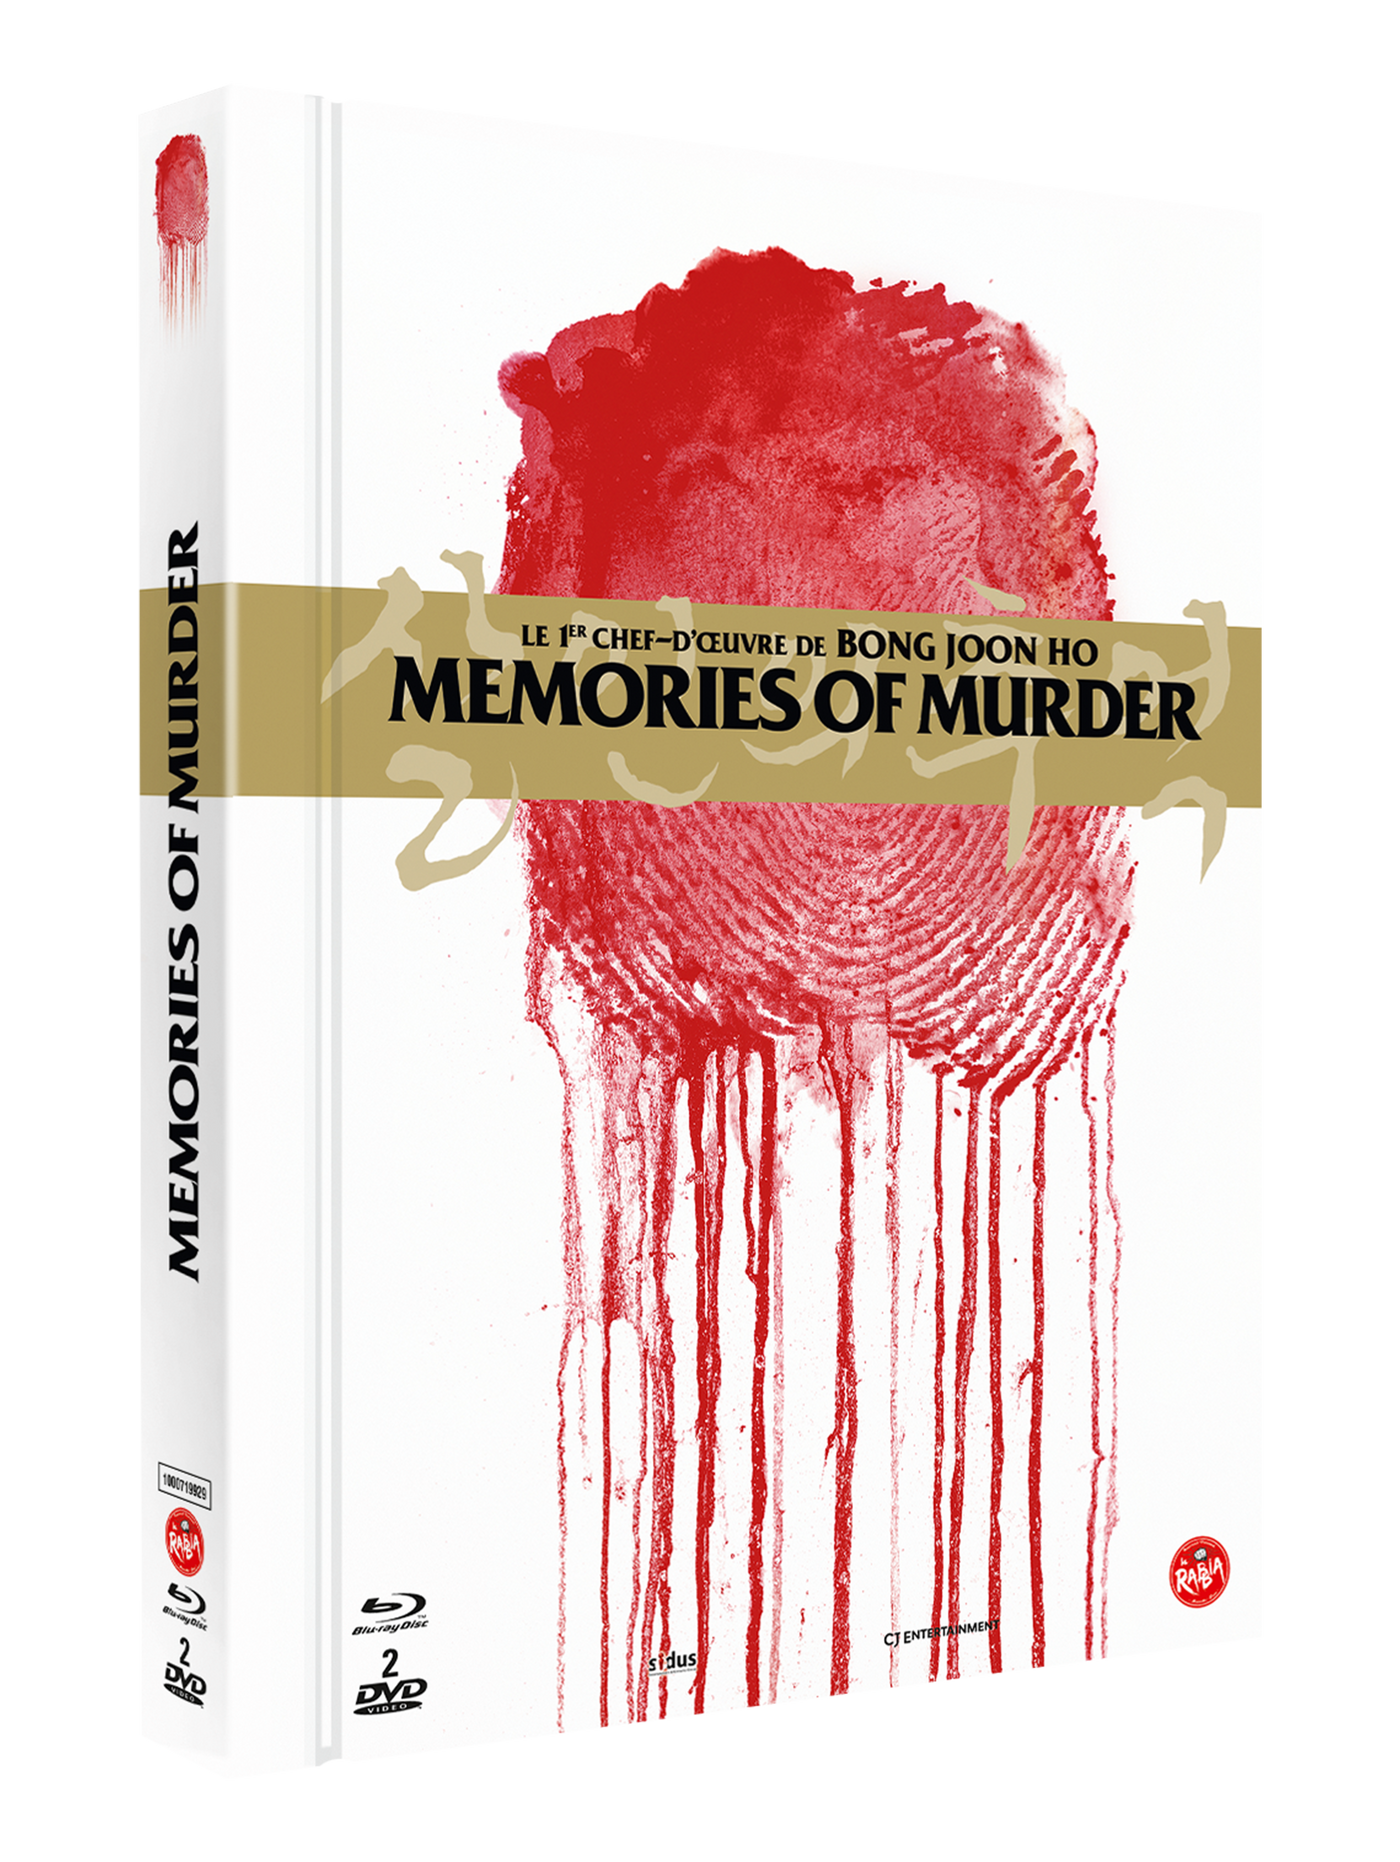 Médiabook "Memories of Murder"